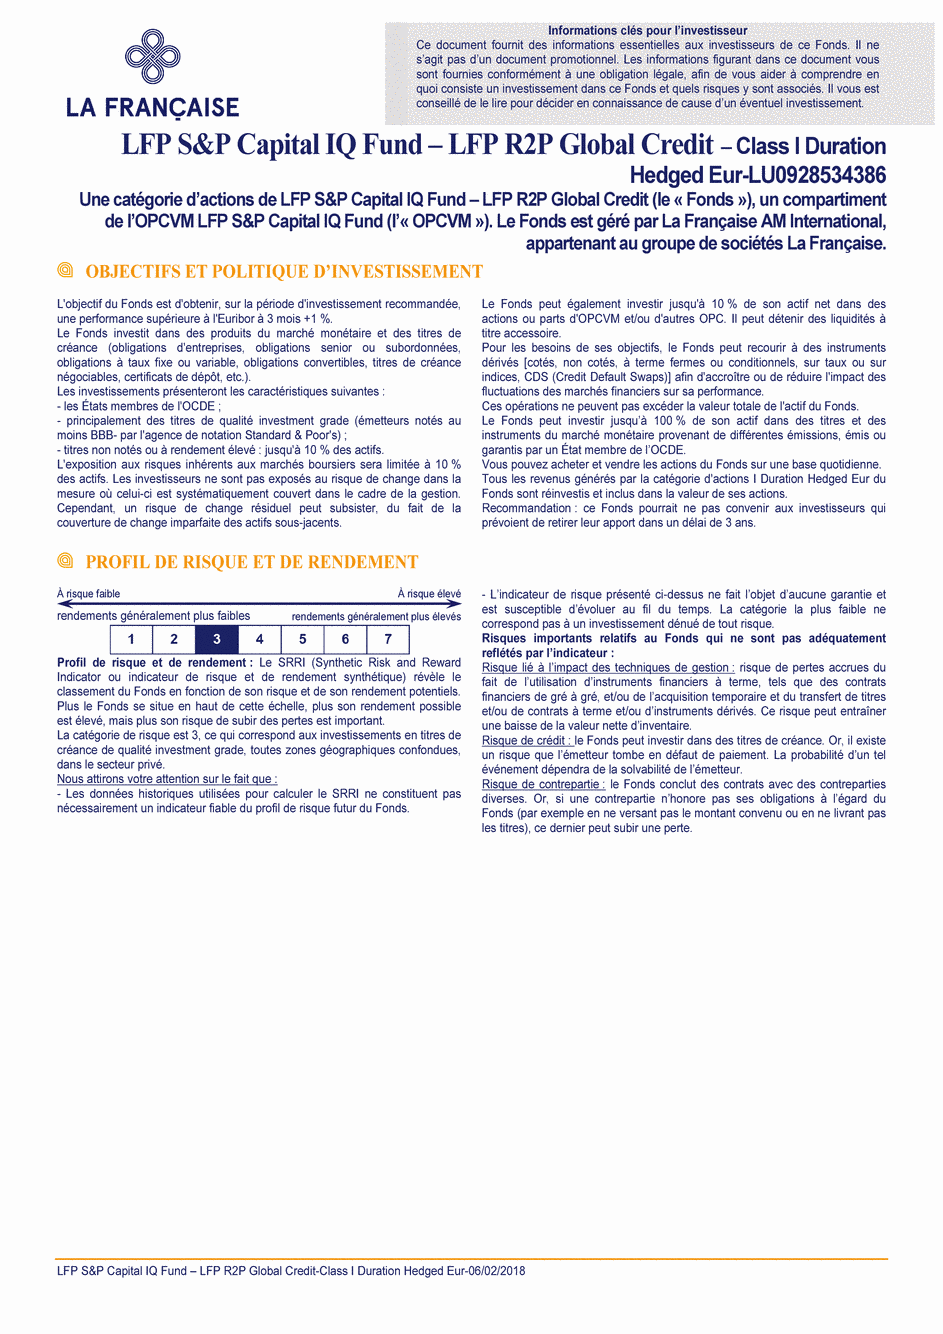 DICI LFP S&P Capital IQ Fund - LFP R2P Global Credit (Class I Duration Hedged C EUR) - 06/02/2018 - Français